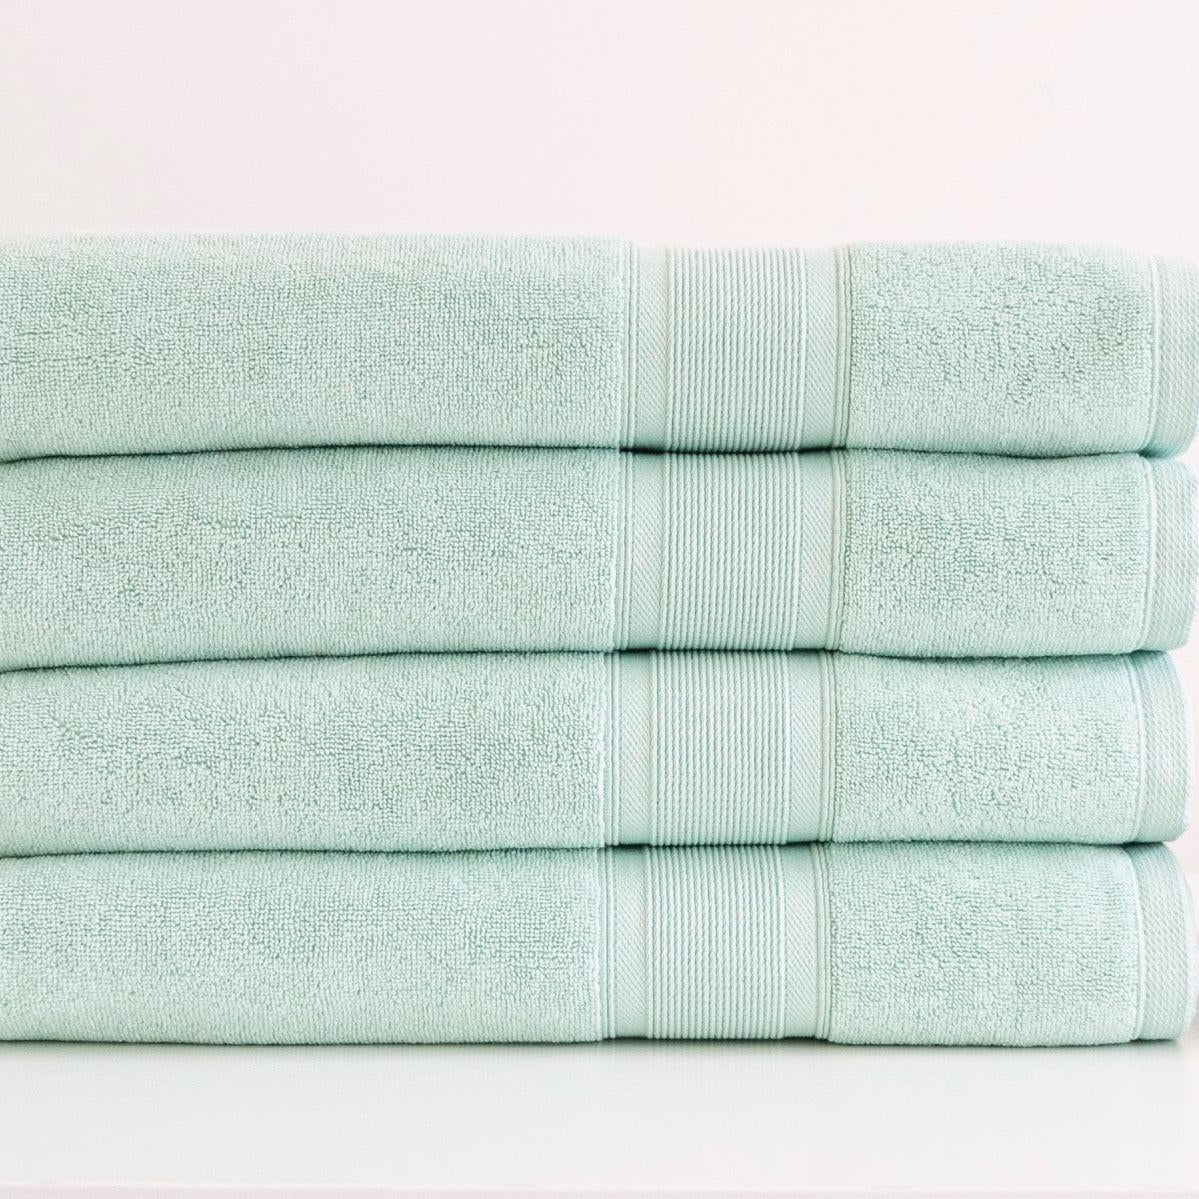 Premium Turkish Cotton Glacier Green Towels